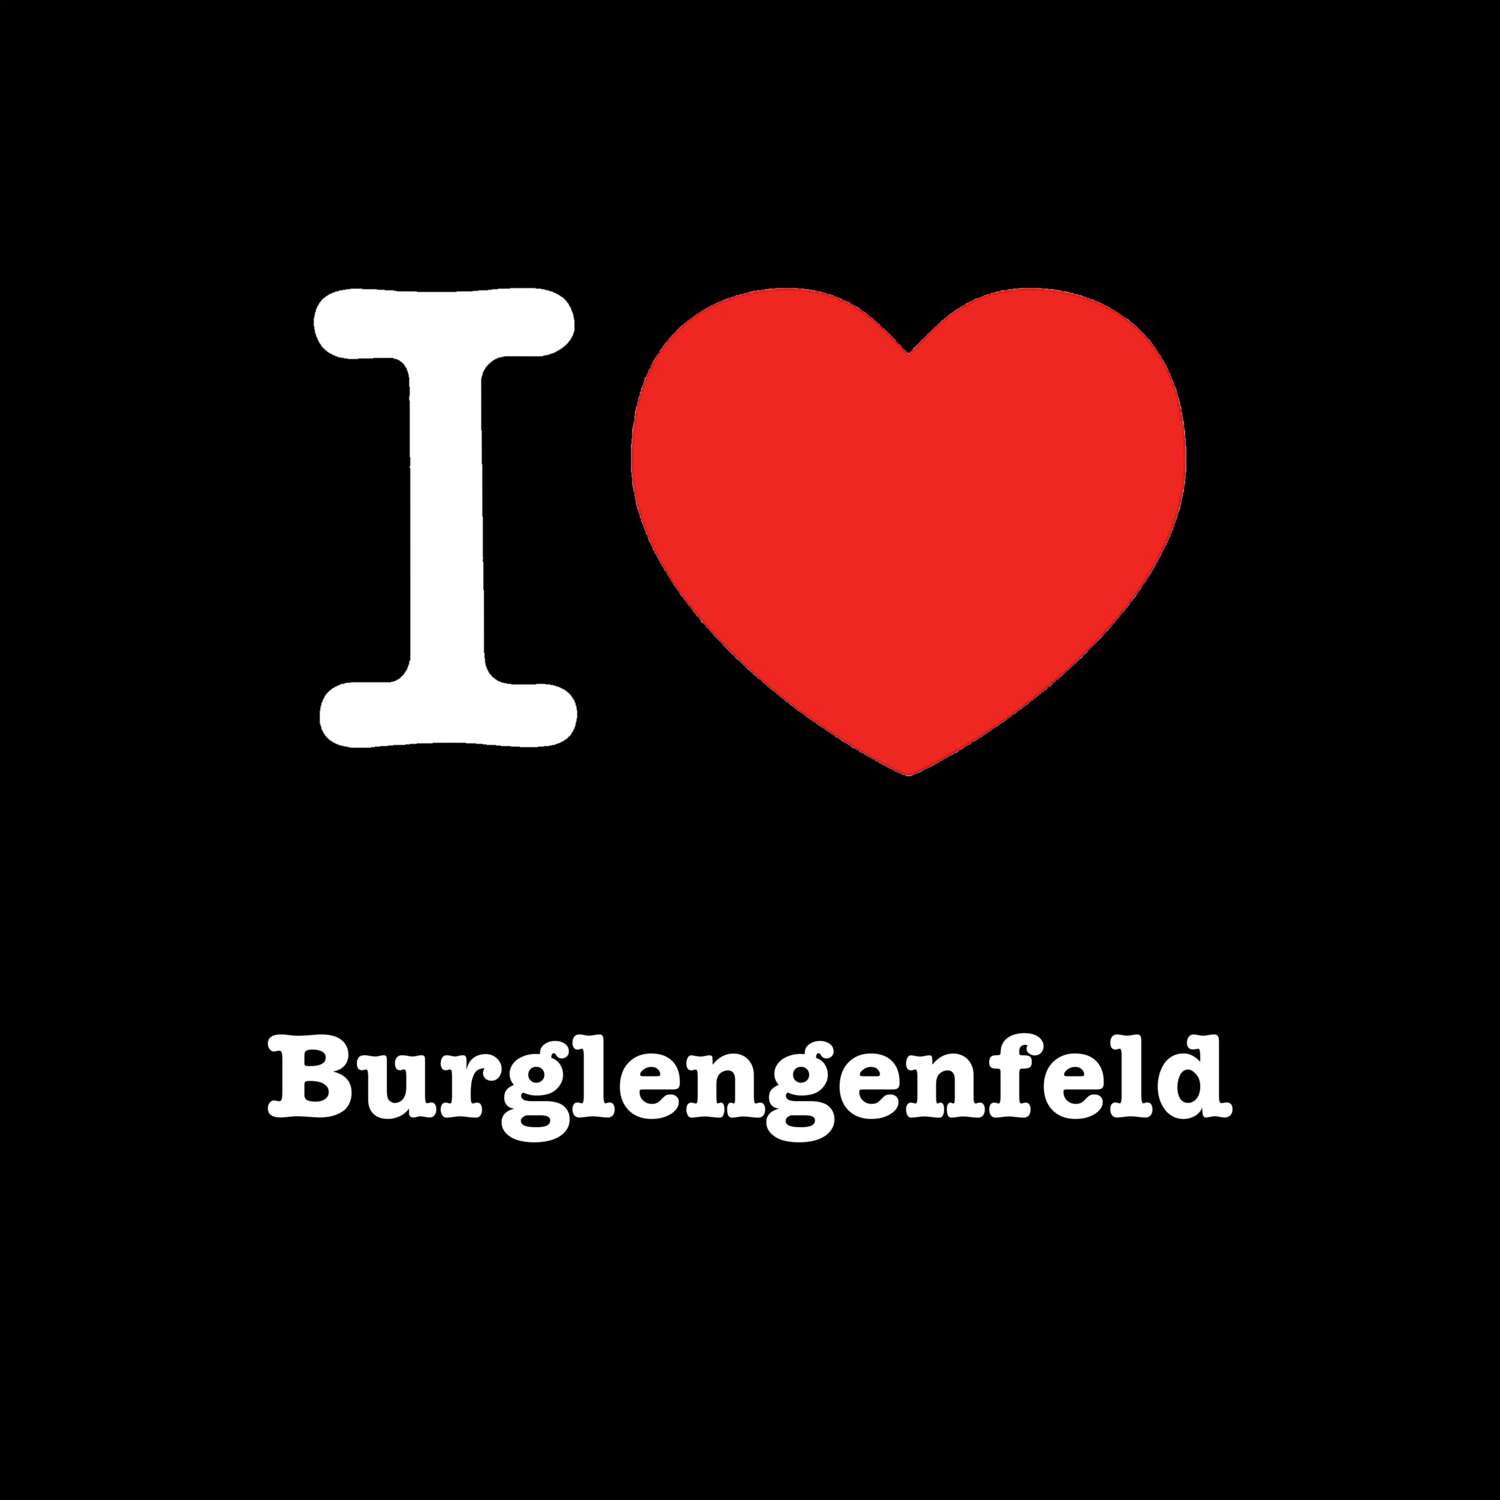 Burglengenfeld T-Shirt »I love«